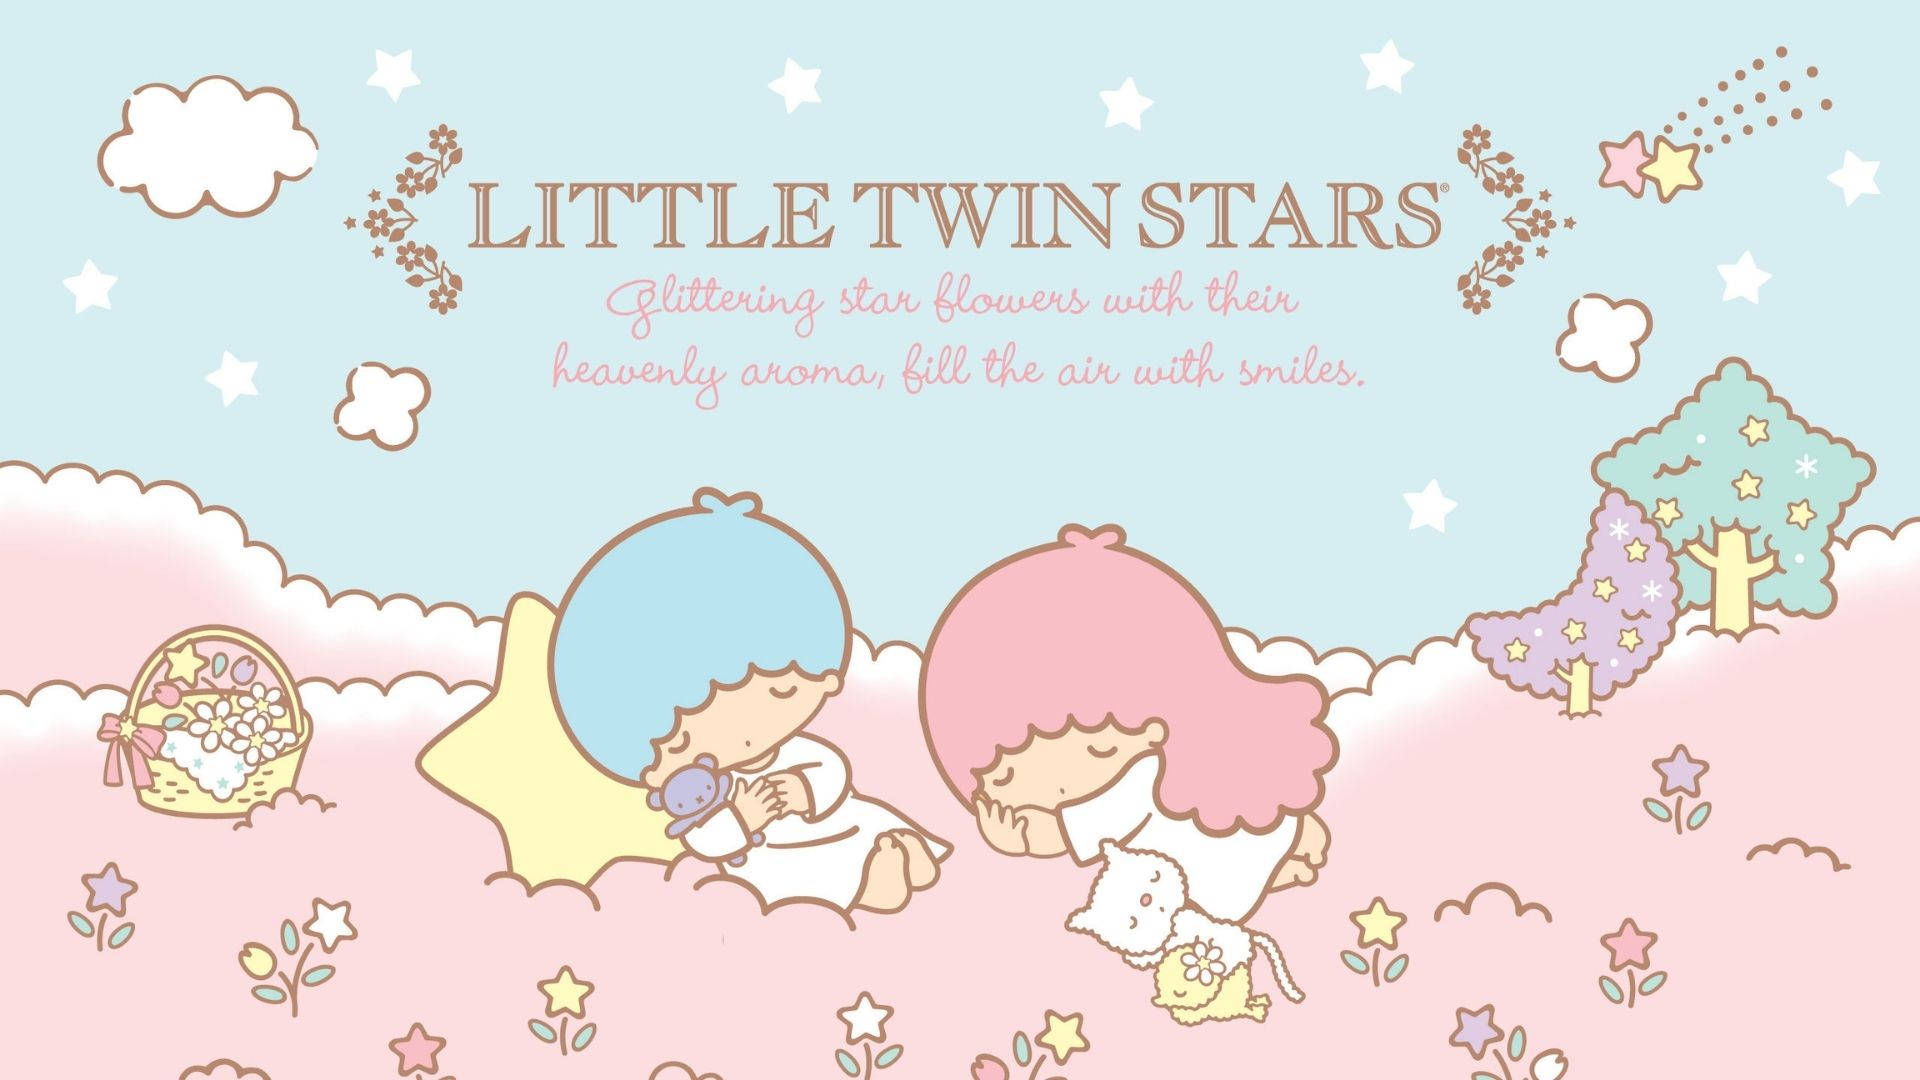 Sleeping Little Twin Stars Background